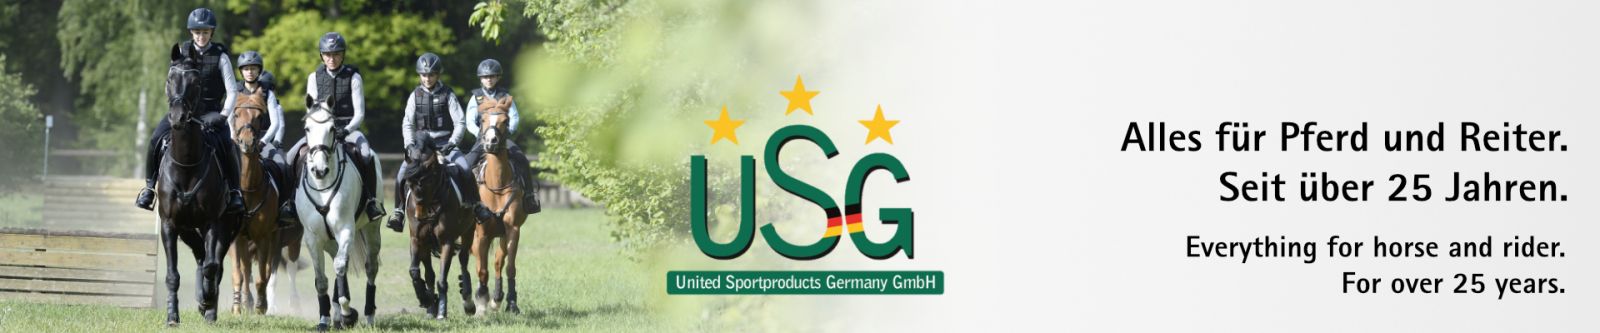 FAQ - RID'UP - USG - United Sportproducts Germany GmbH